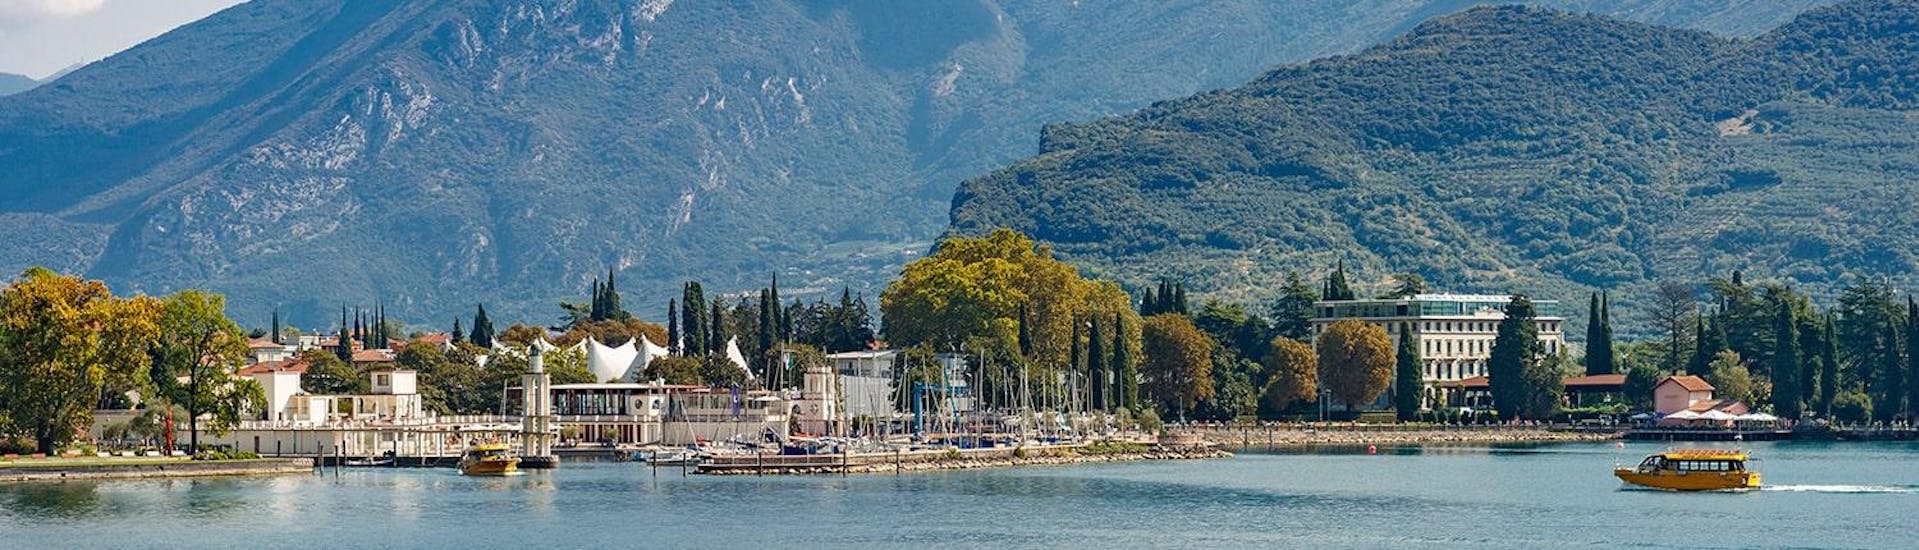 Une balade en bateau sur le lac de Garde vers Limone et Malcesine avec Speedy Boat Riva del Garda.